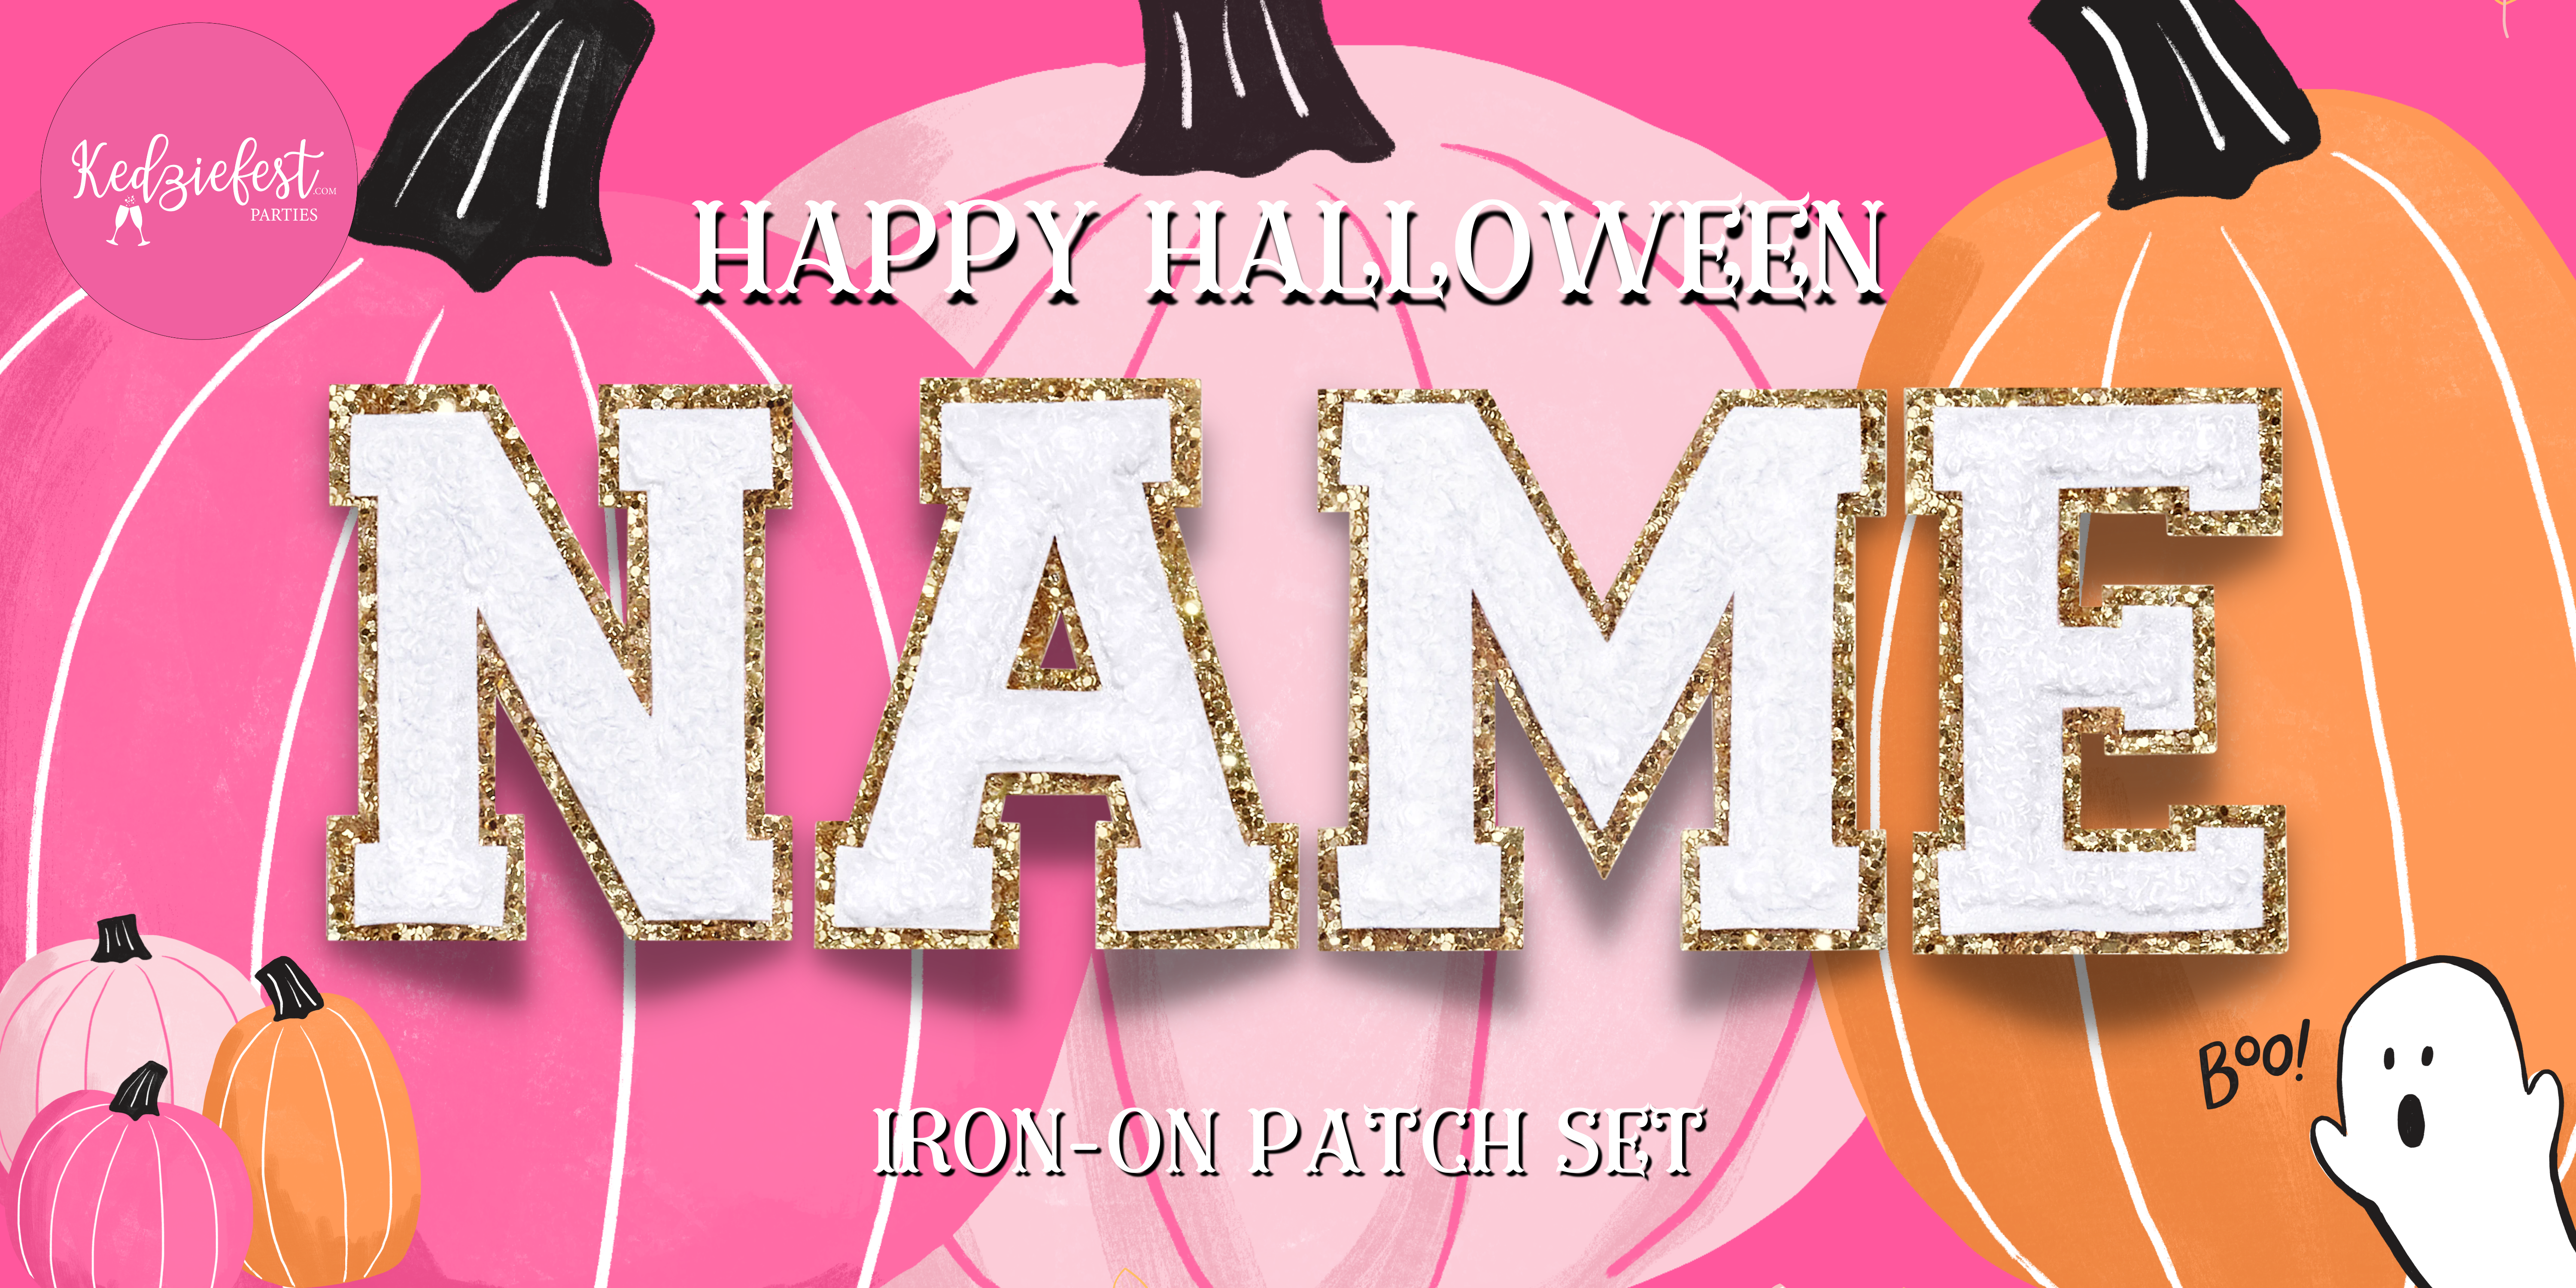 Custom Happy Halloween Iron-On Patch Set by Kedziefest Parties